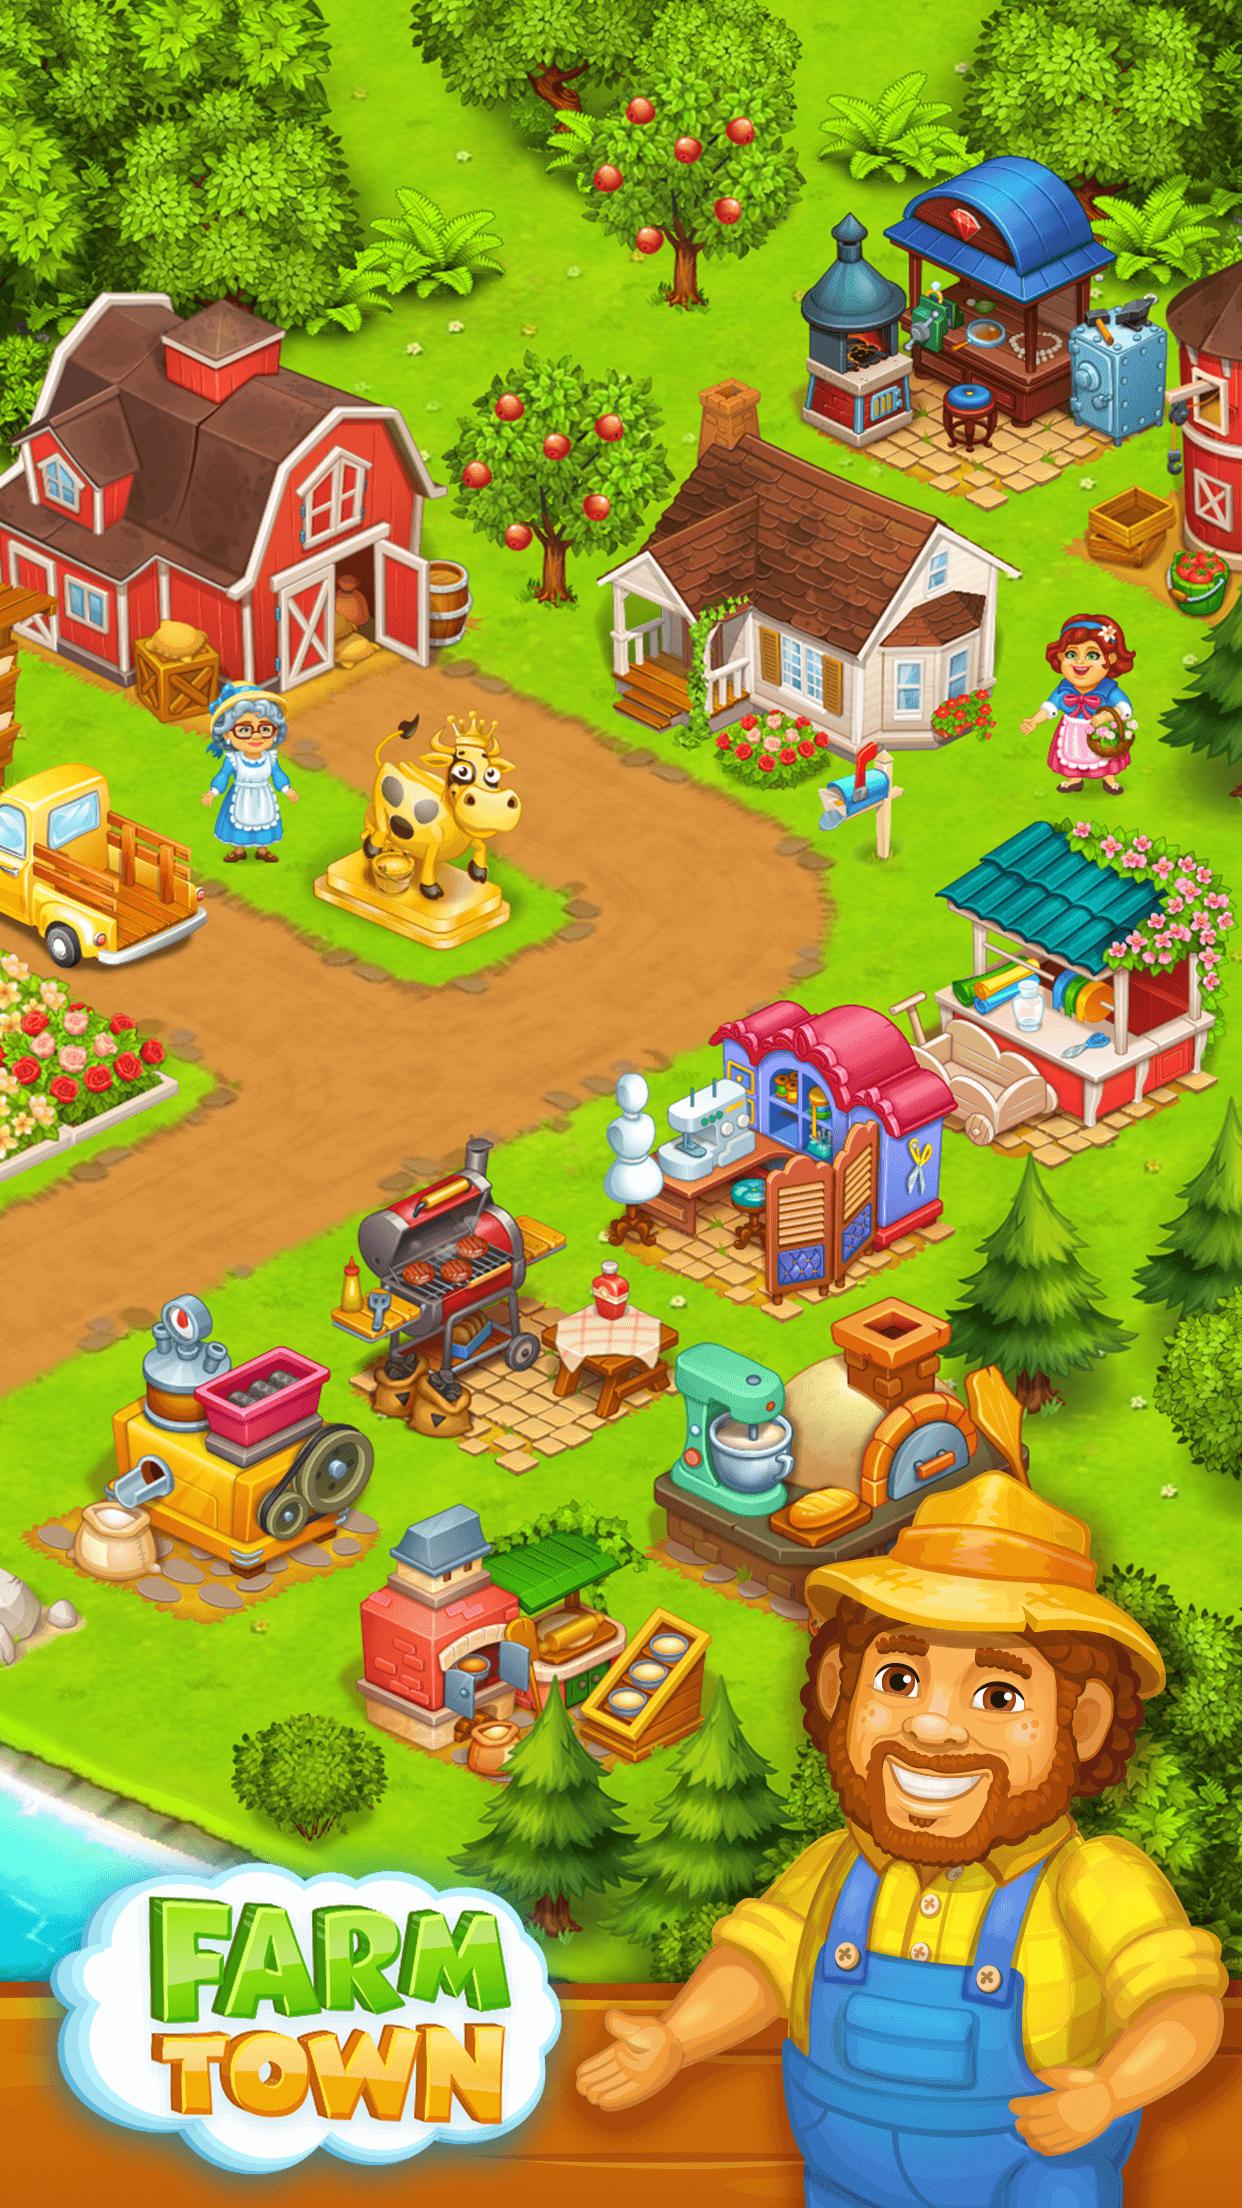 Farm Town Happy farming Day & food farm game City 3.41 Screenshot 2